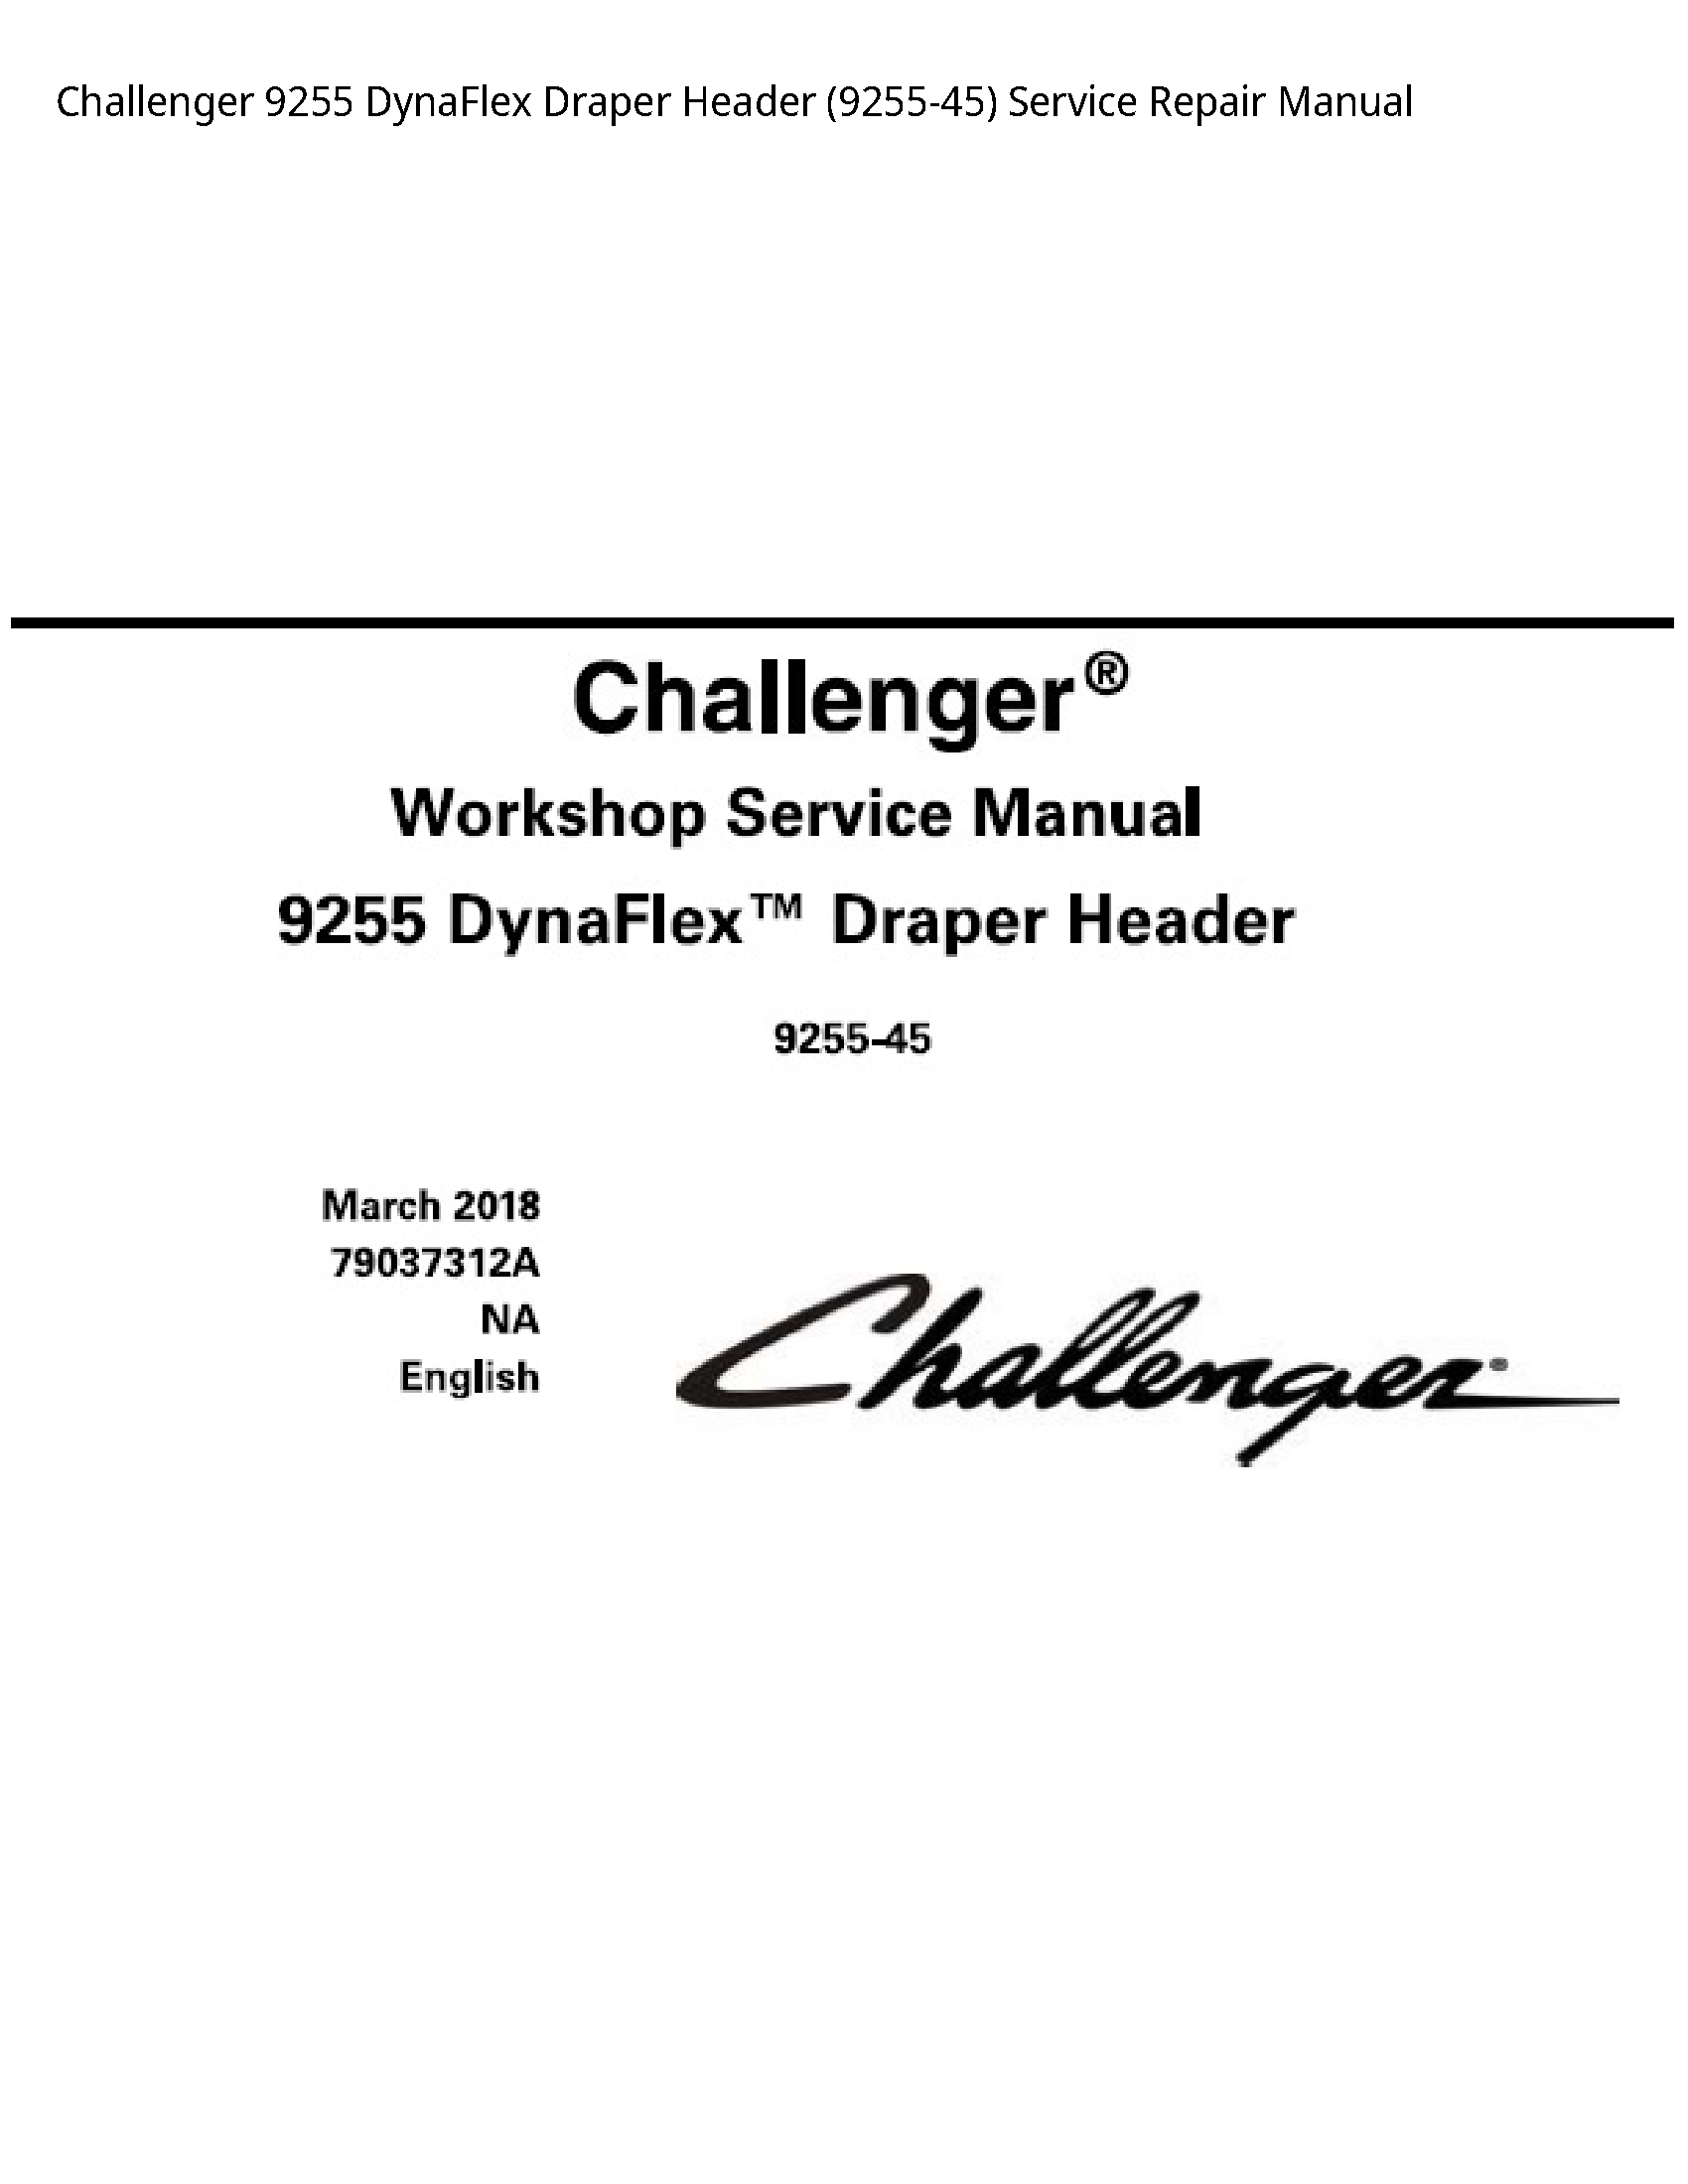 Challenger 9255 DynaFlex Draper Header manual